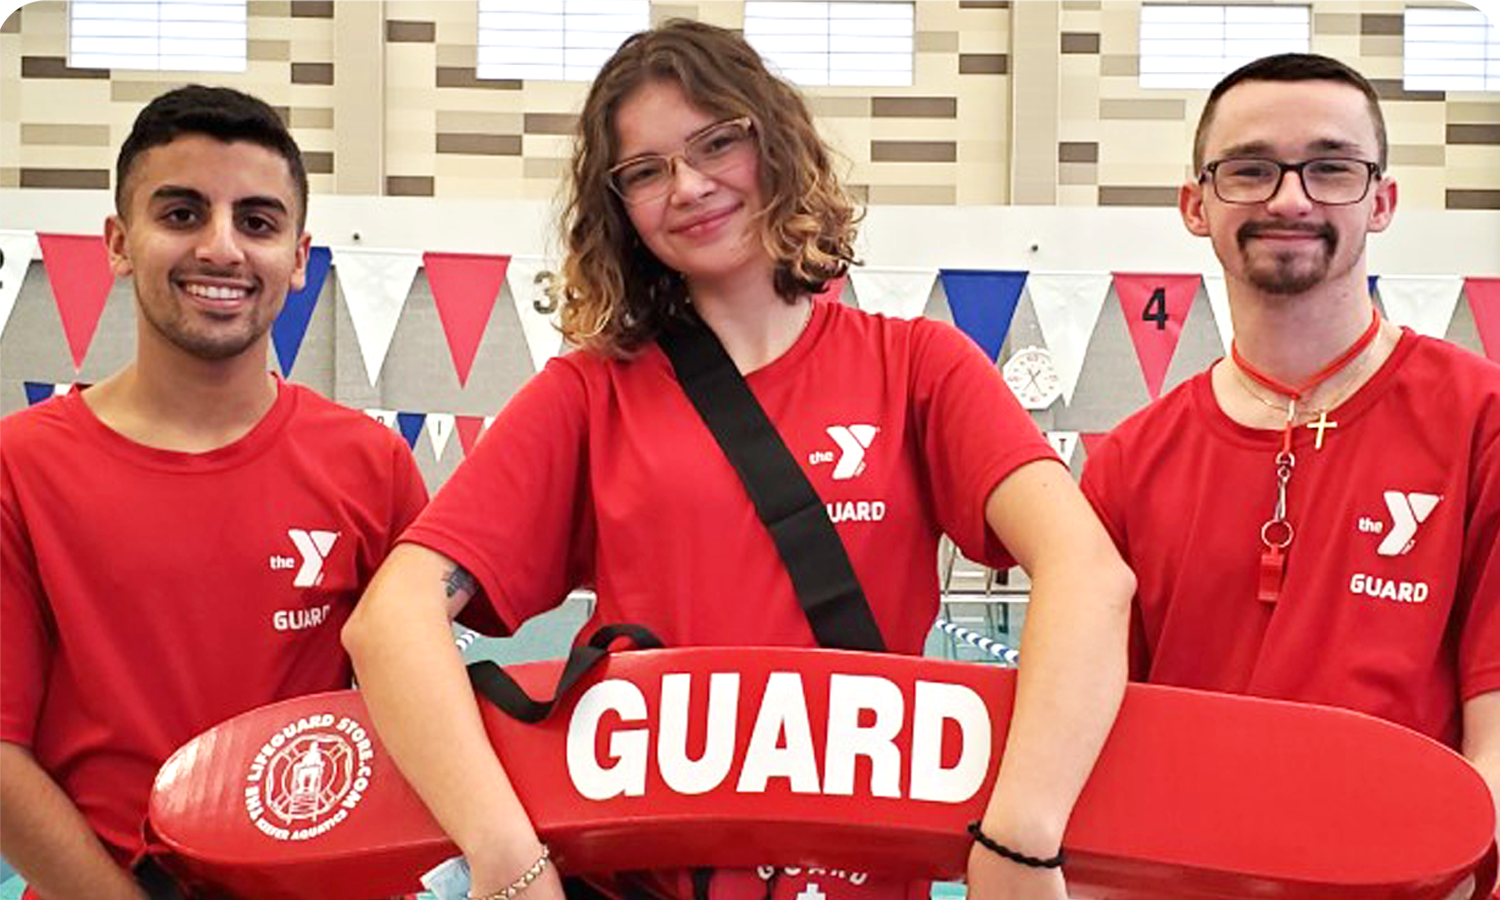 YMCA Lifeguard Training